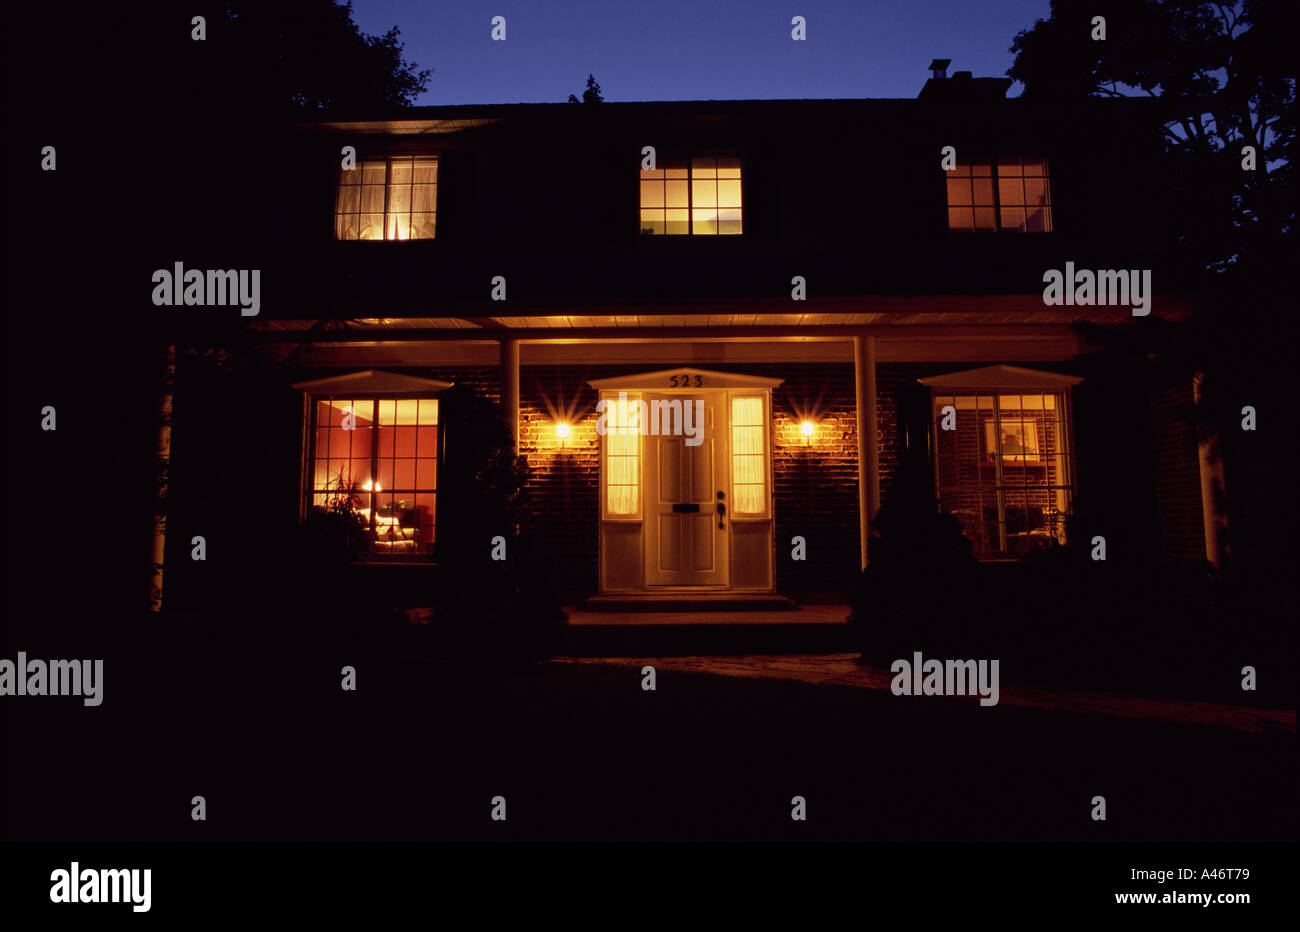 Luxury house illuminated at night Stock Photo